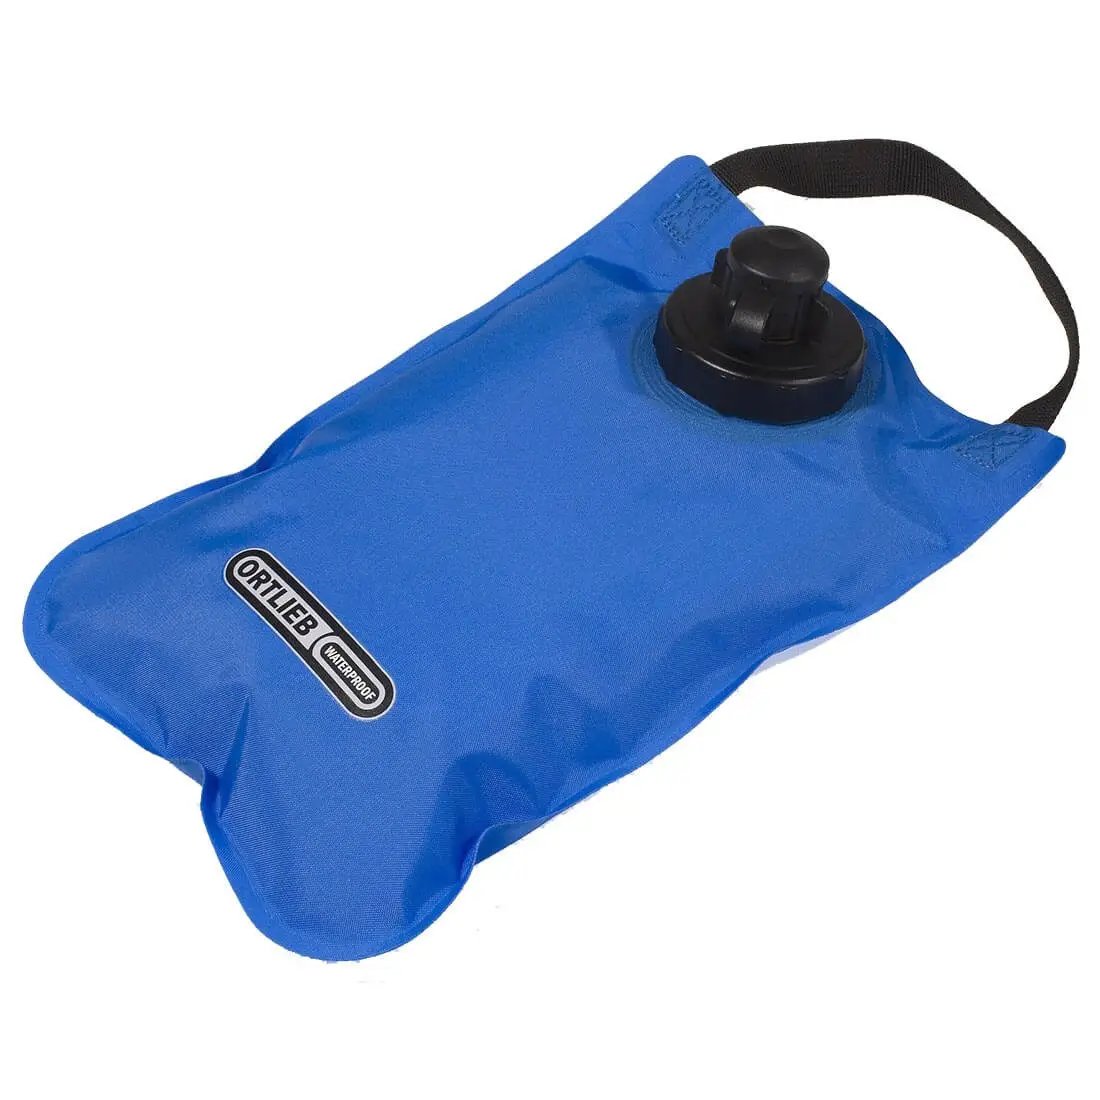 Ortlieb 2L Water Sack Bag Bladder - John Bull Clothing